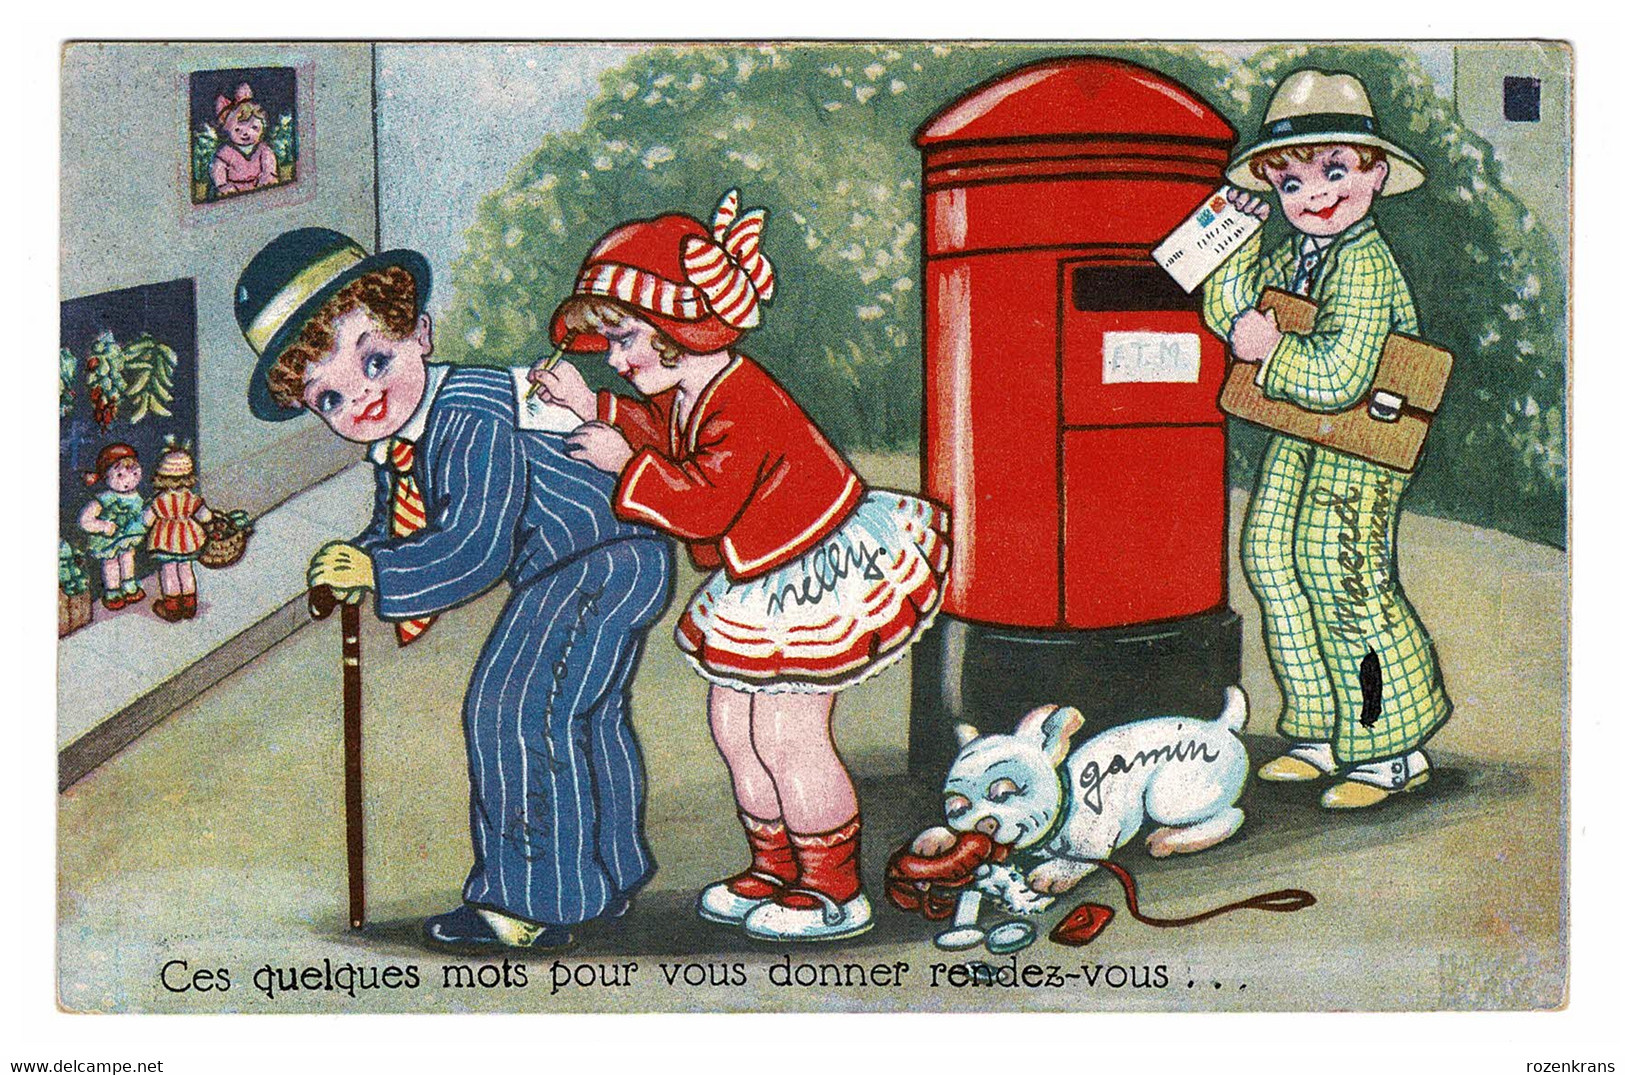 Kind Kinderen Enfants Children Illustrateur Margret Boriss Illustrator Post Box Mail Postbus Boite Postale - Boriss, Margret